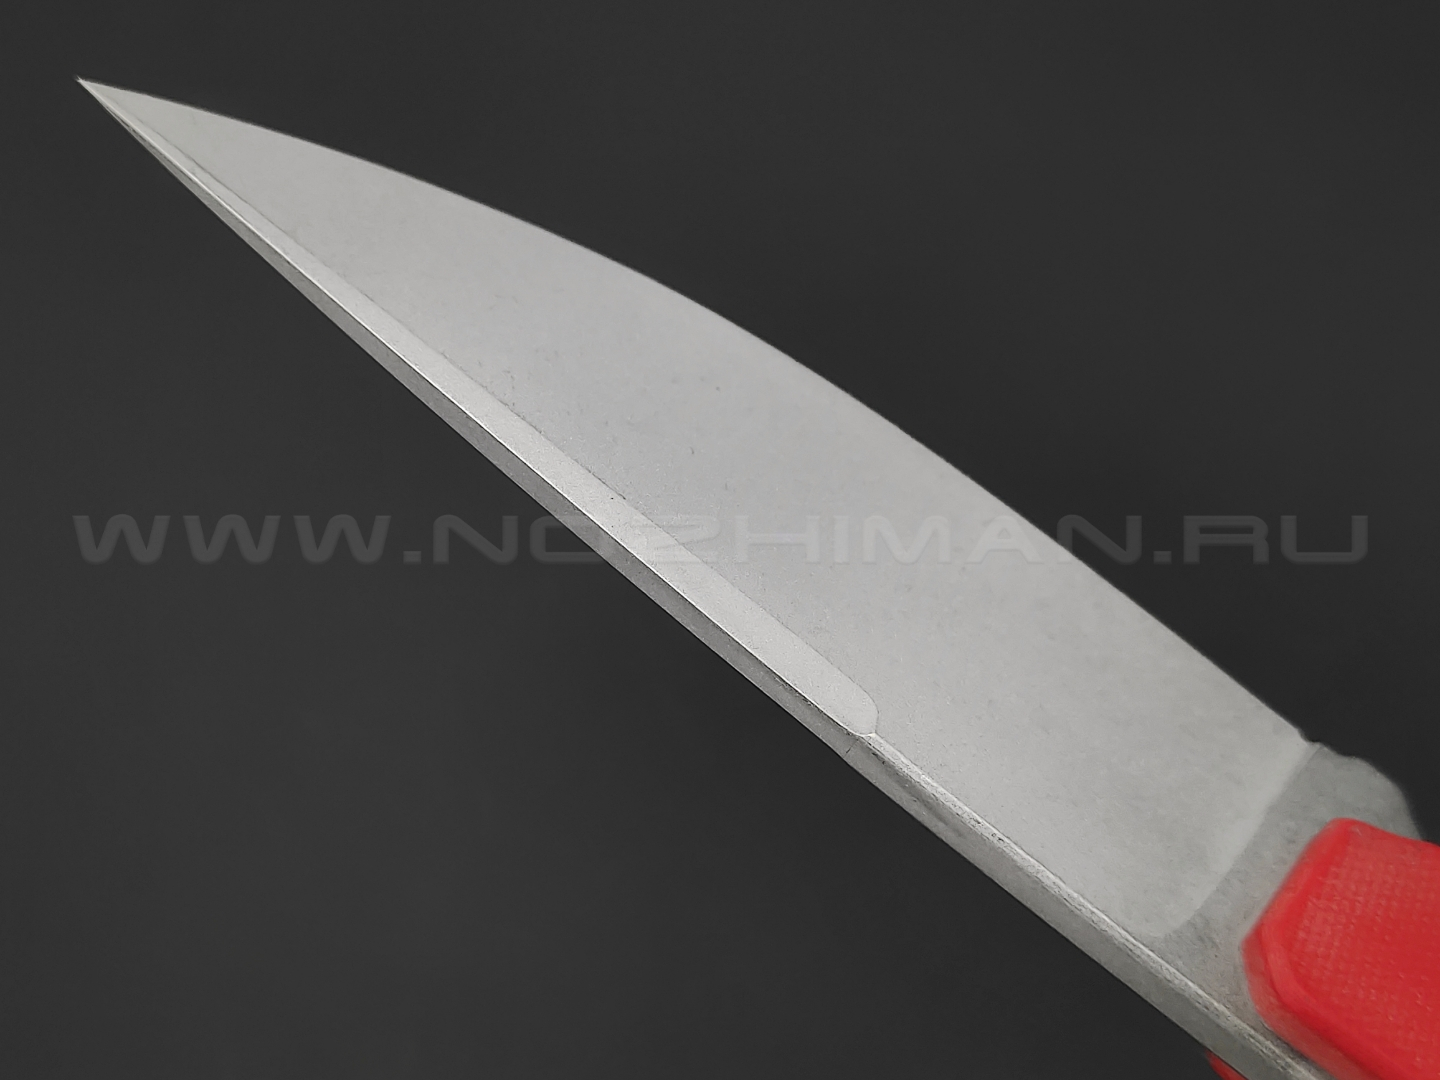 Apus Knives нож Manitou сталь N690, рукоять G10 red